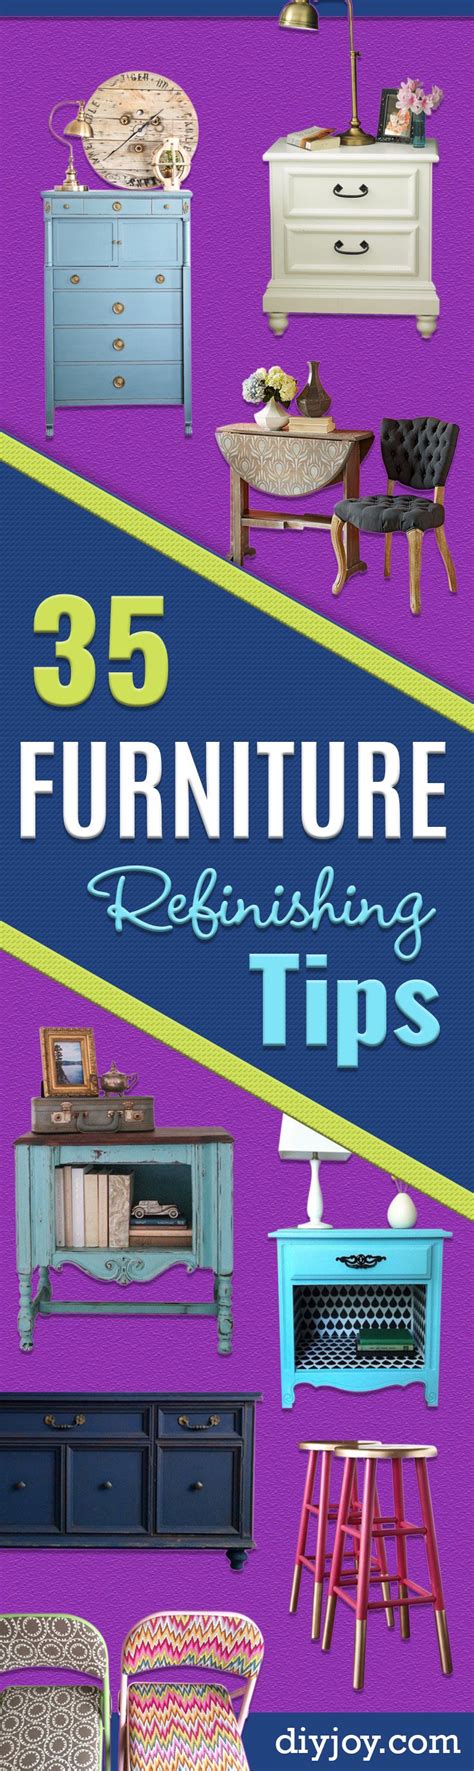 35 Furniture Refinishing Tips